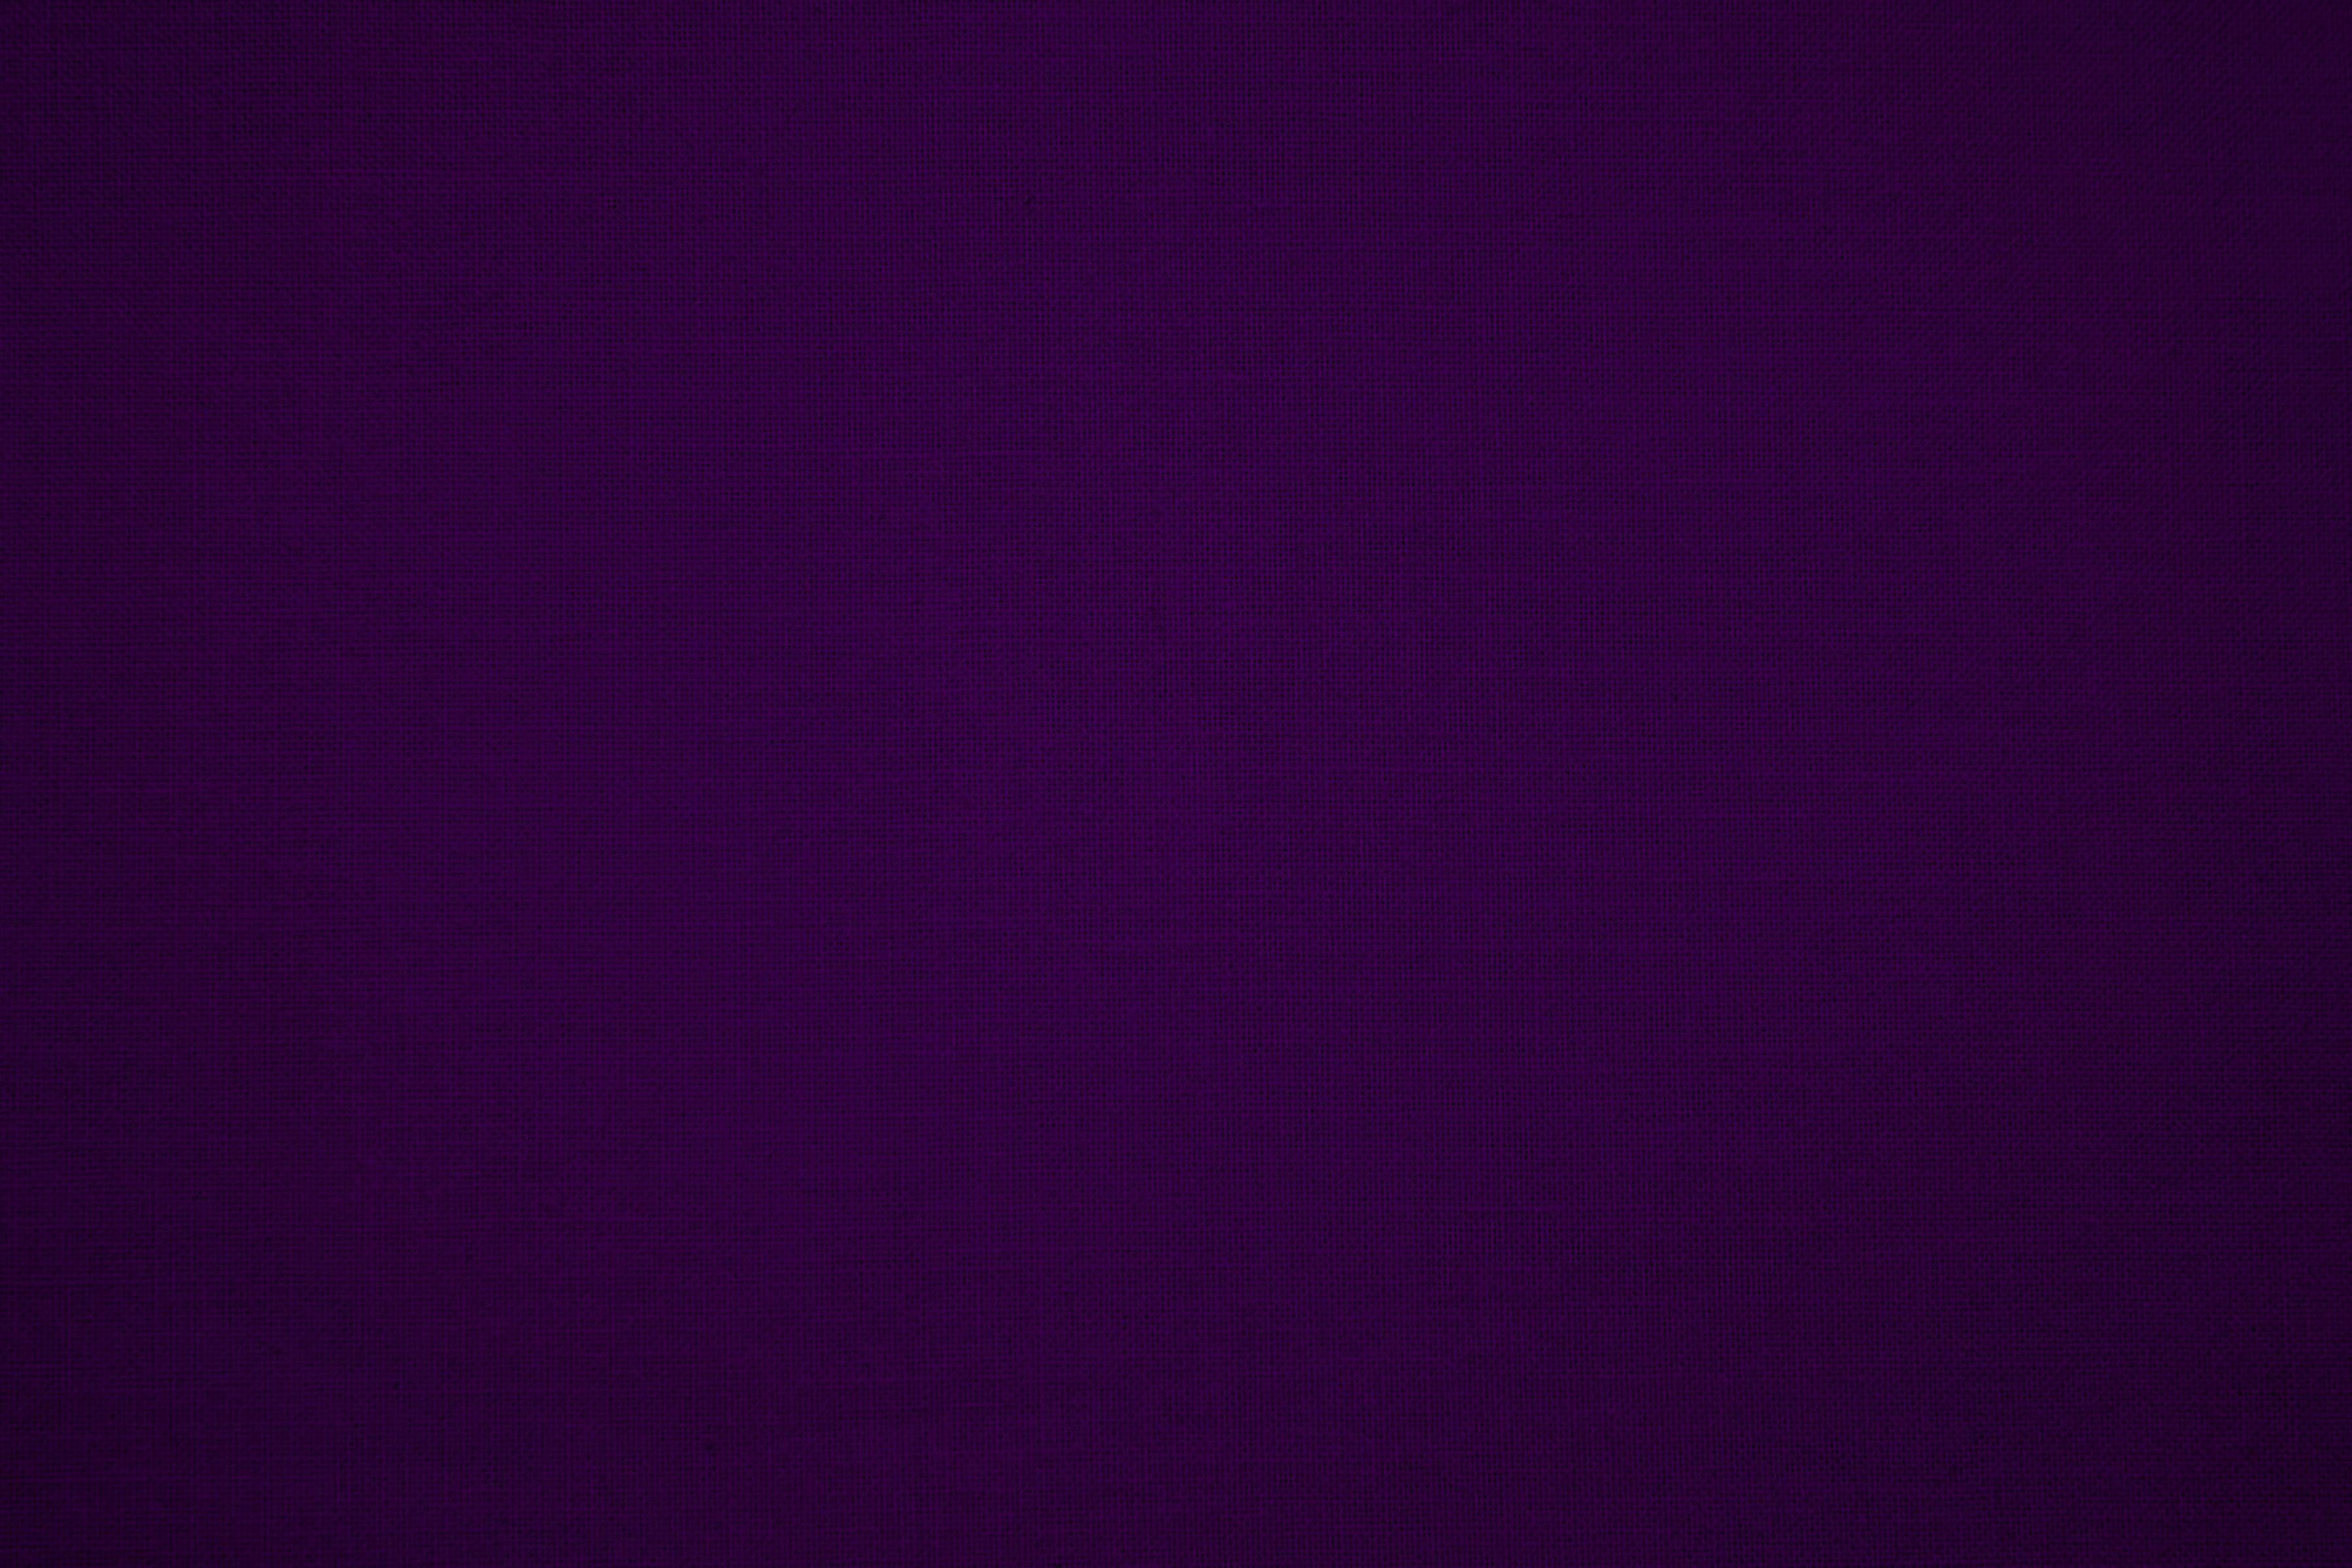 Dark pastel purple  966fd6   plain background image